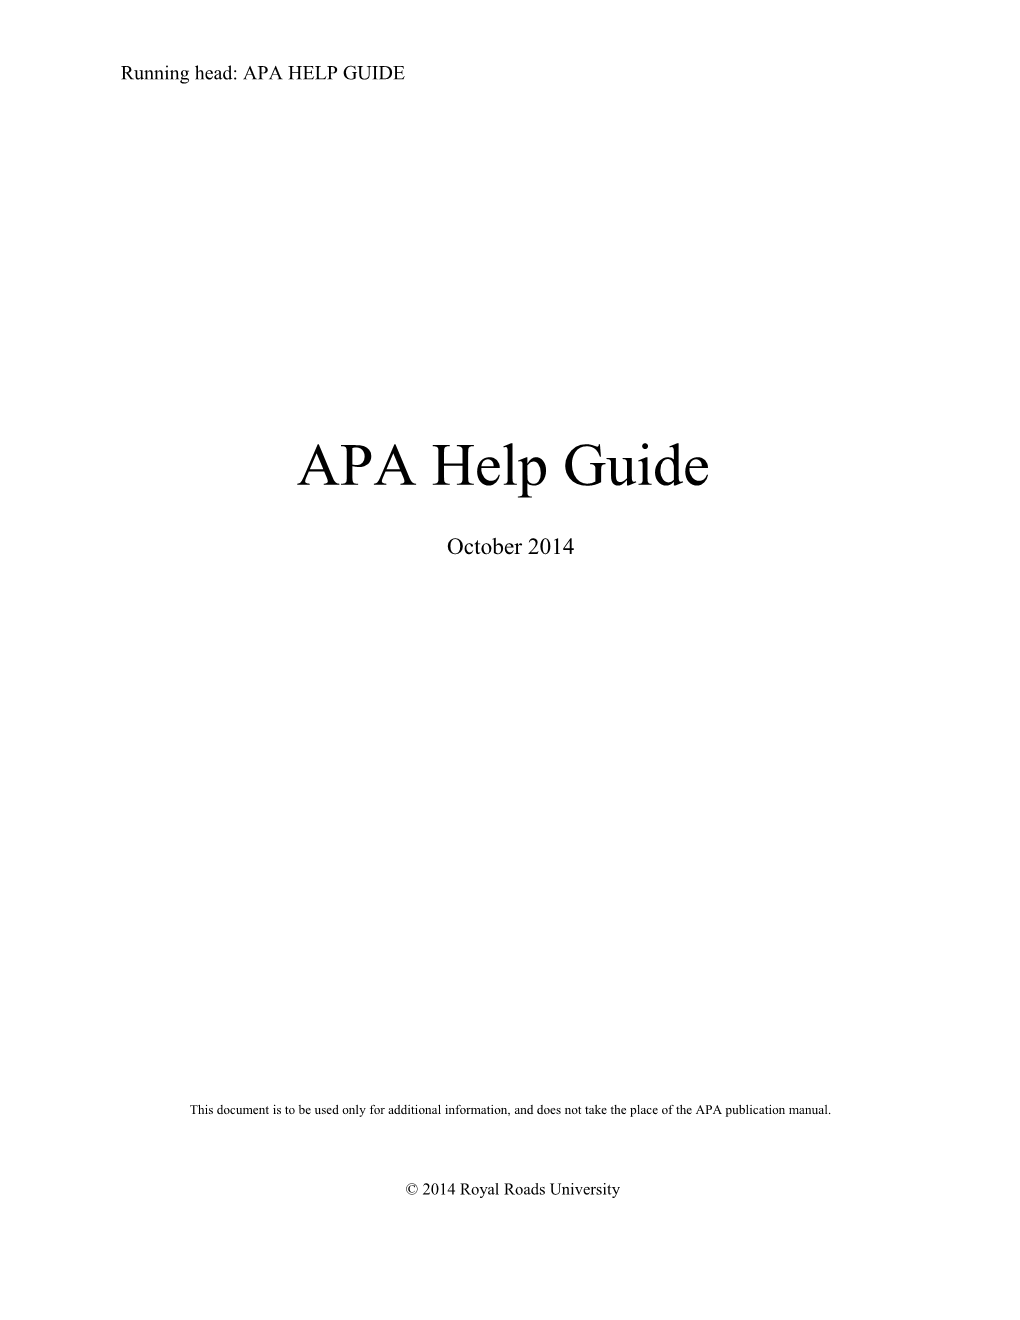 APA Style Helper